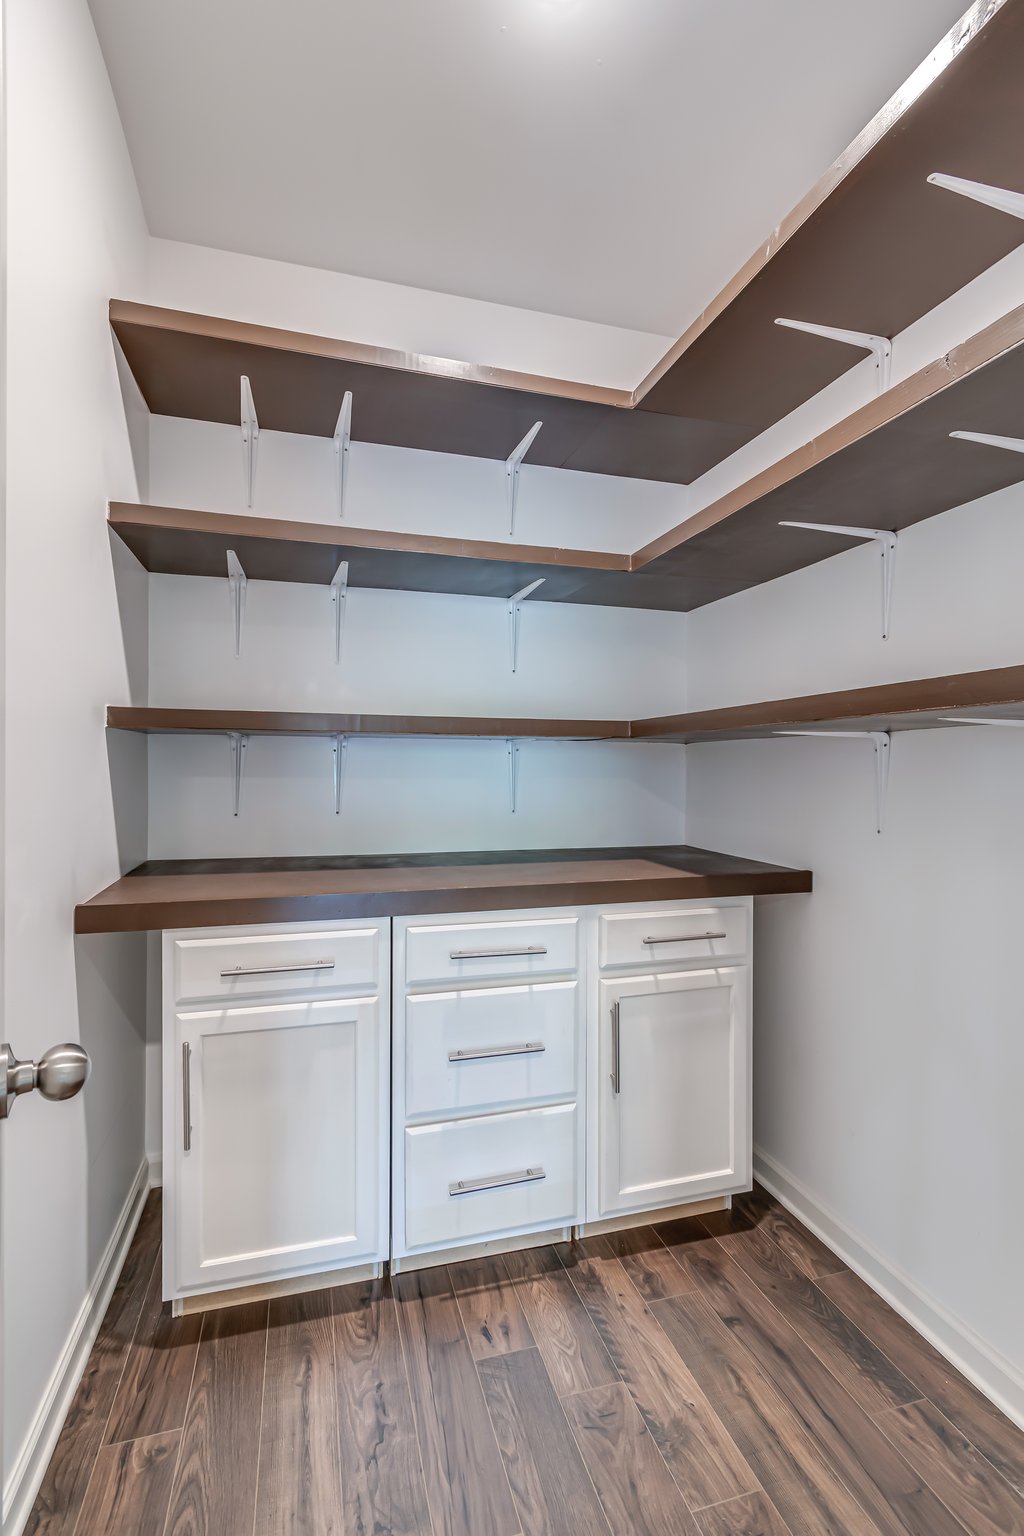 Walk-in pantry has custom cabinetry & shelving